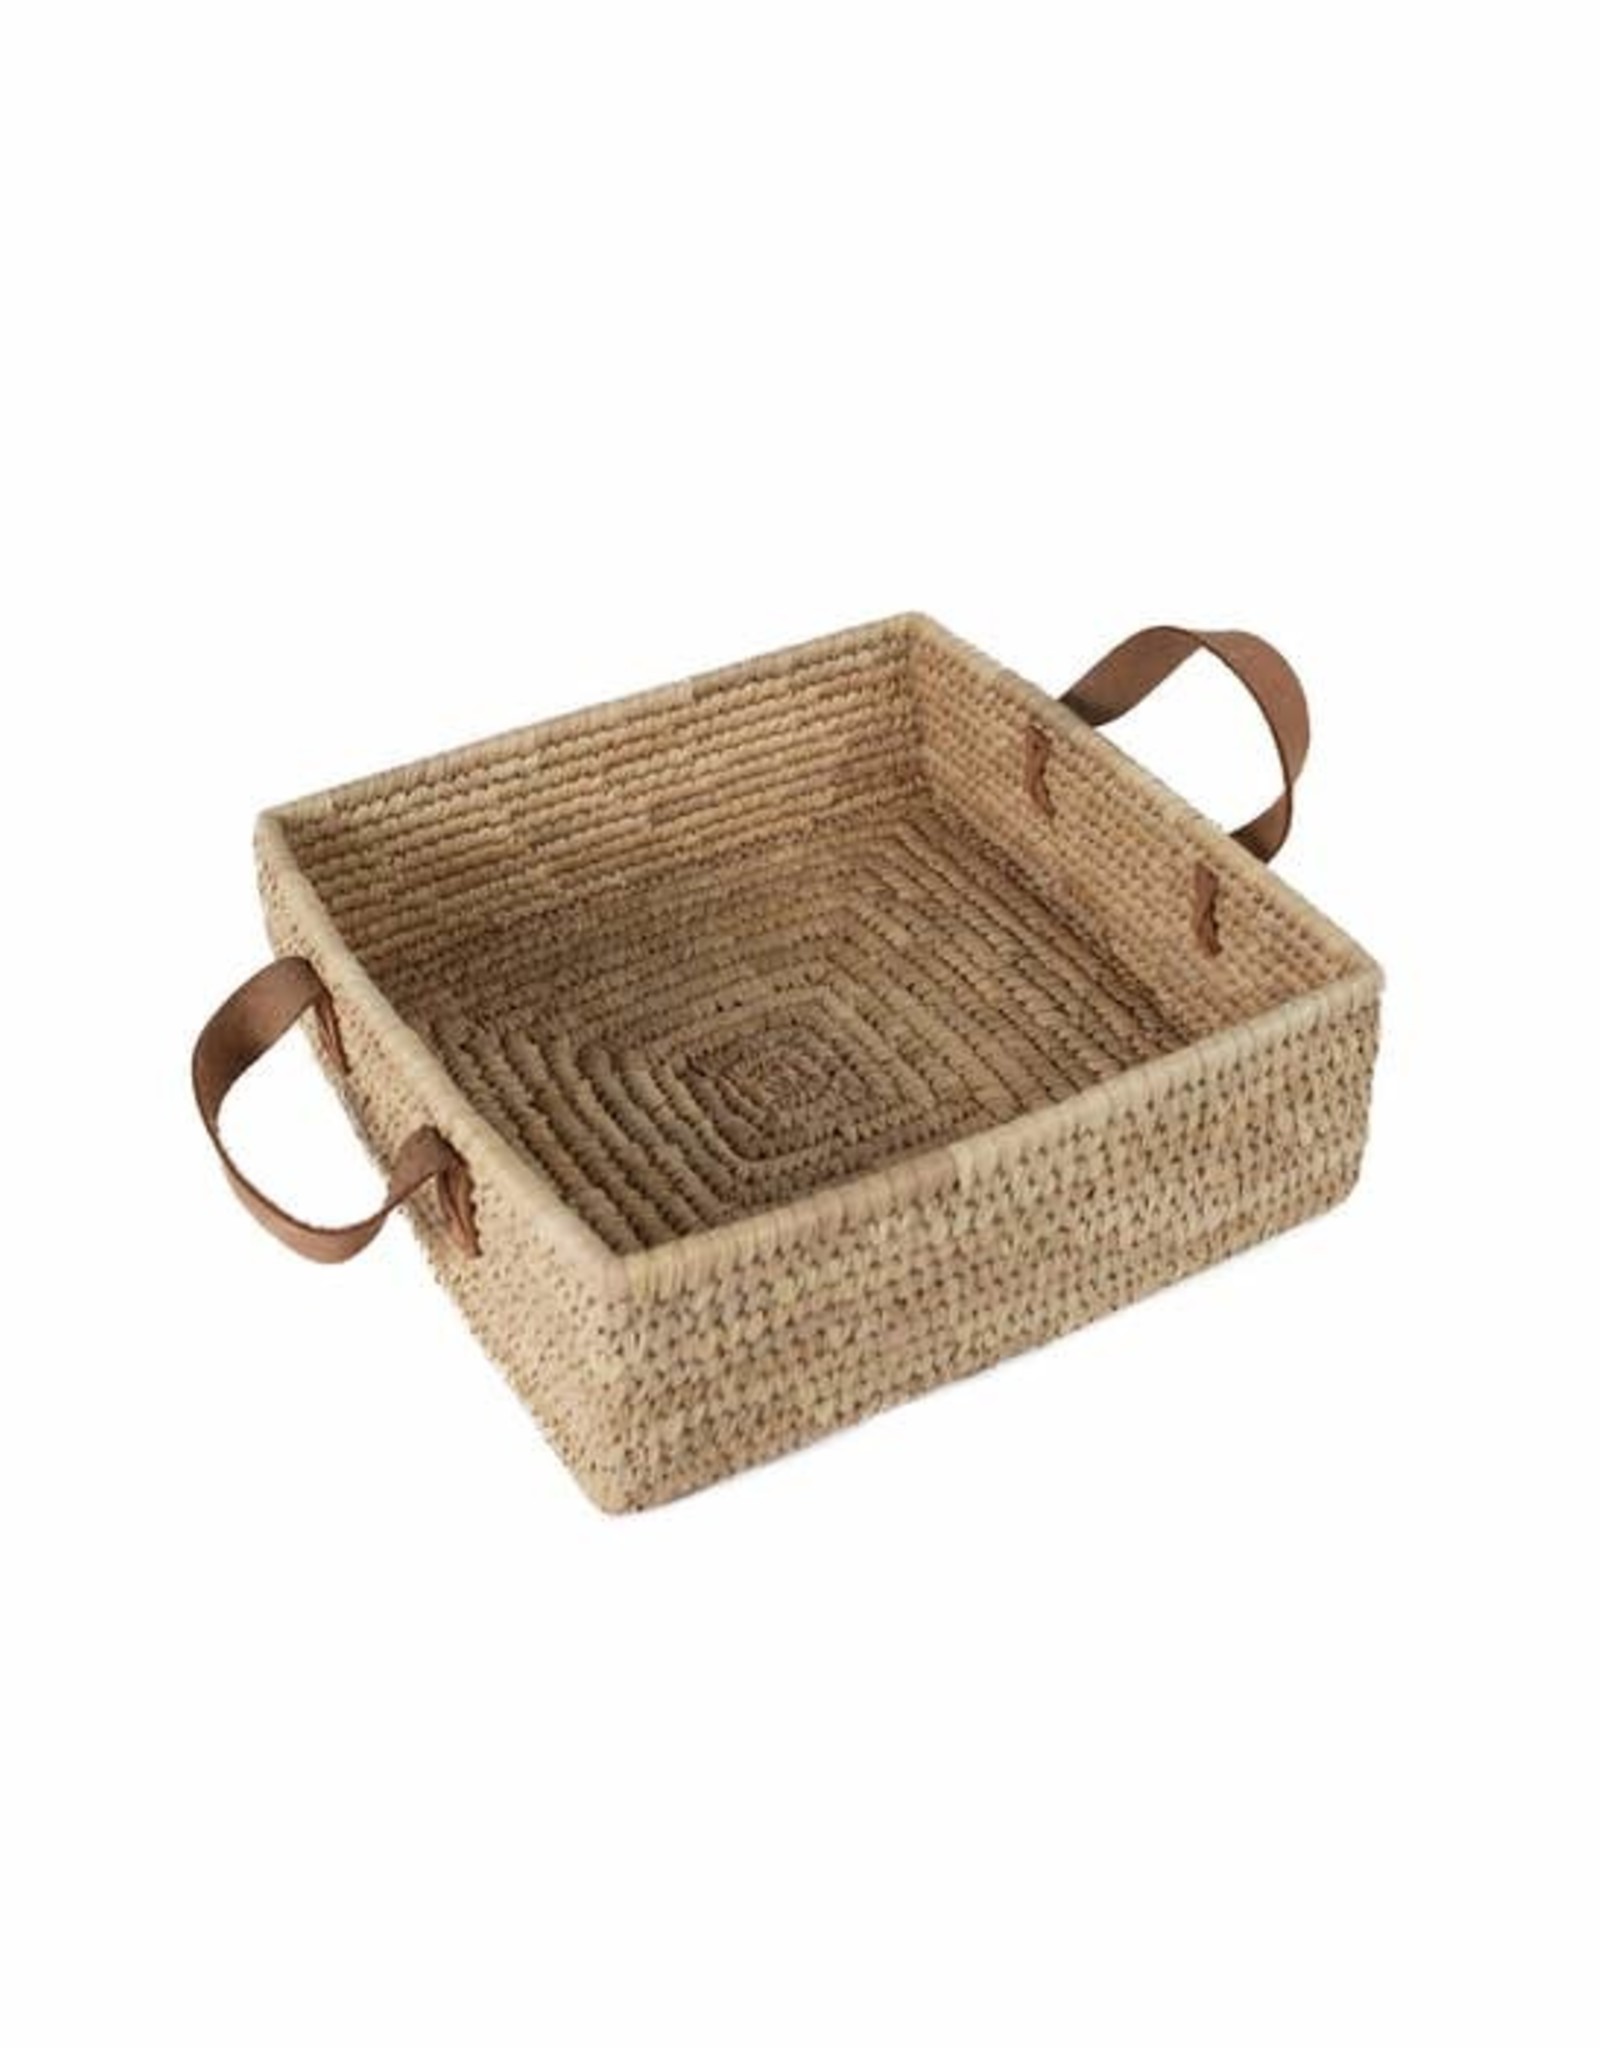 Ten Thousand Villages Square Handled Basket